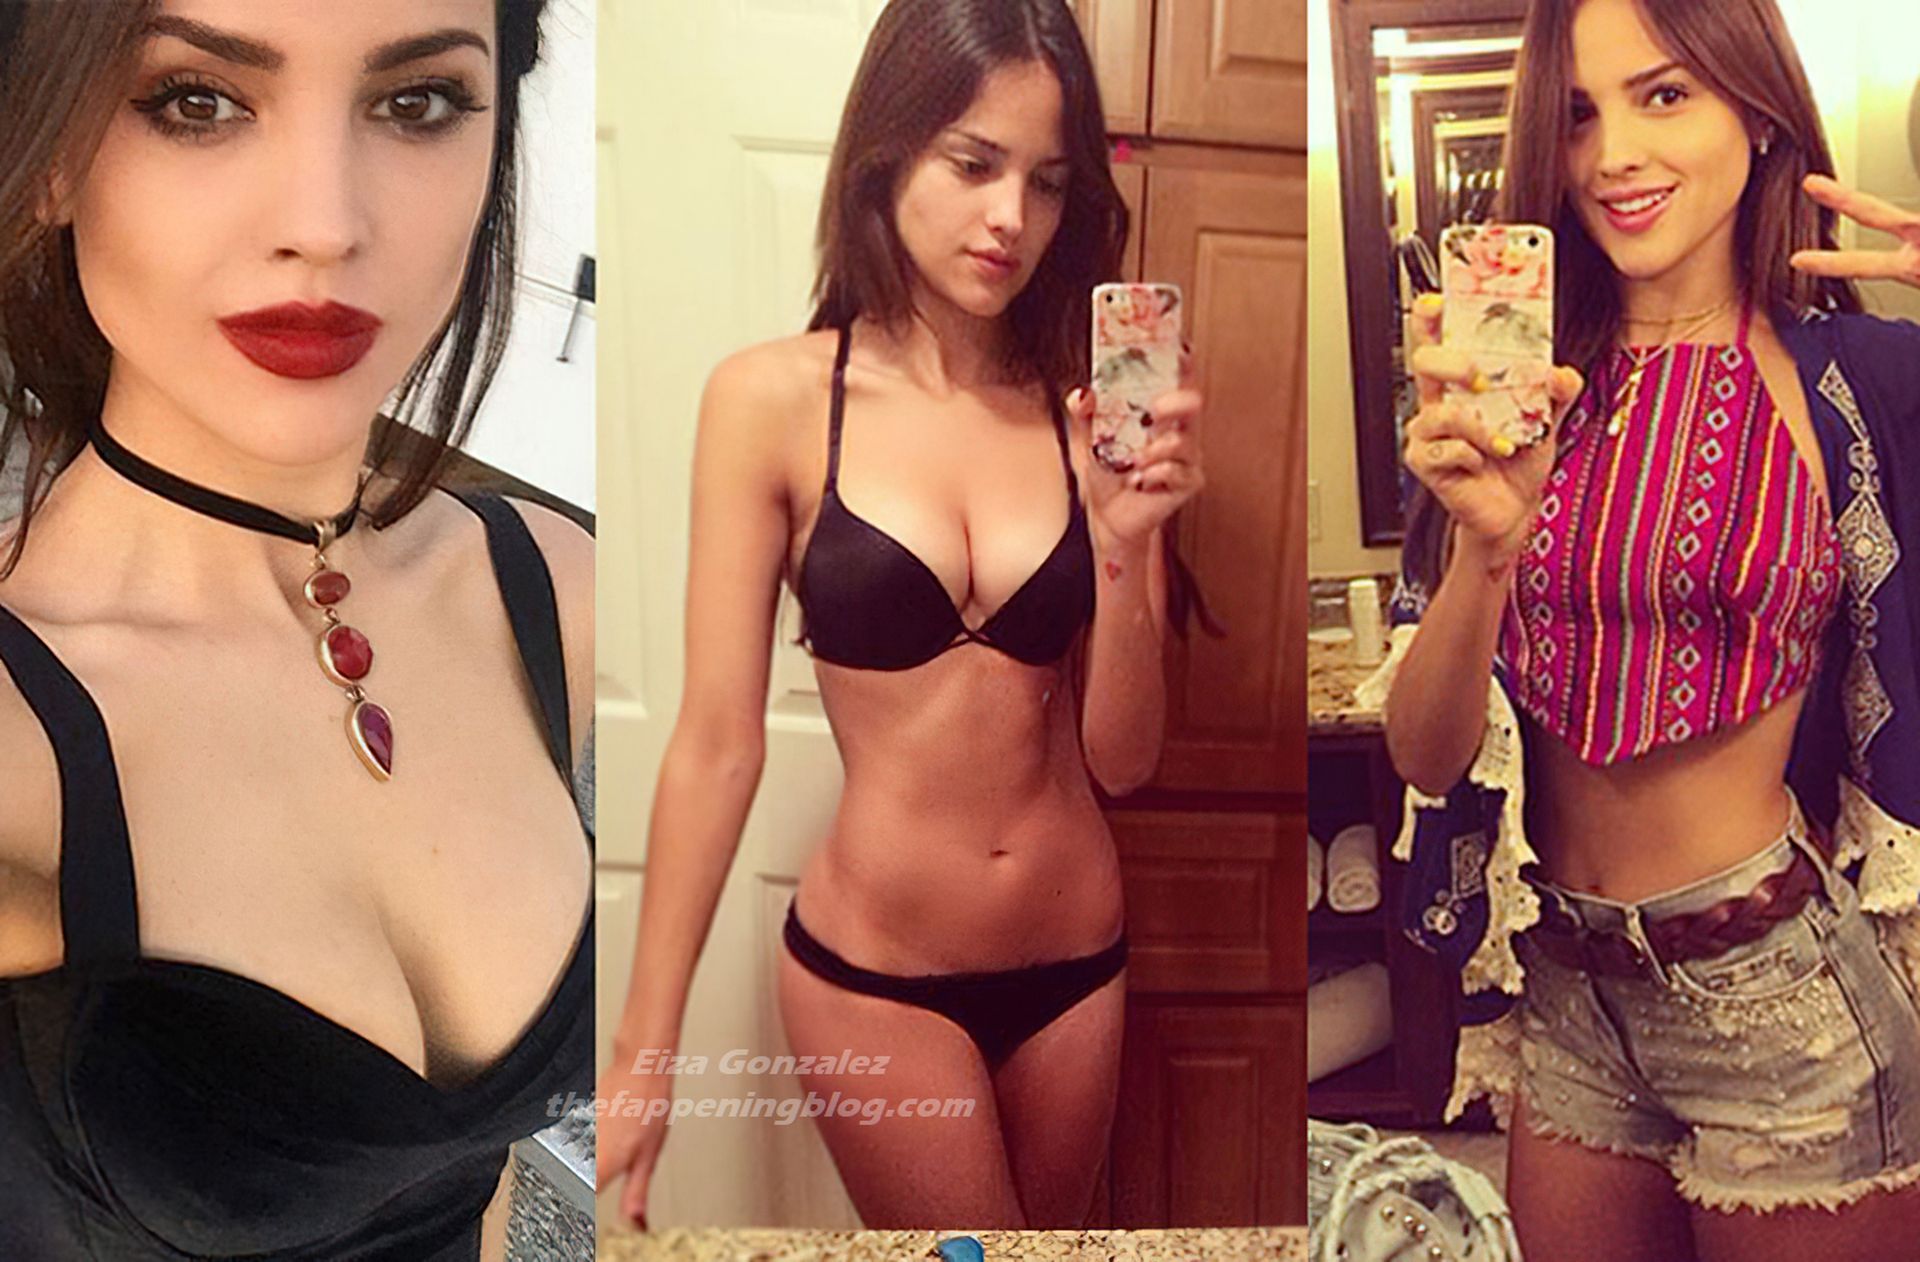 Eiza Gonzalez Nude Selfies Released (6 Photos)